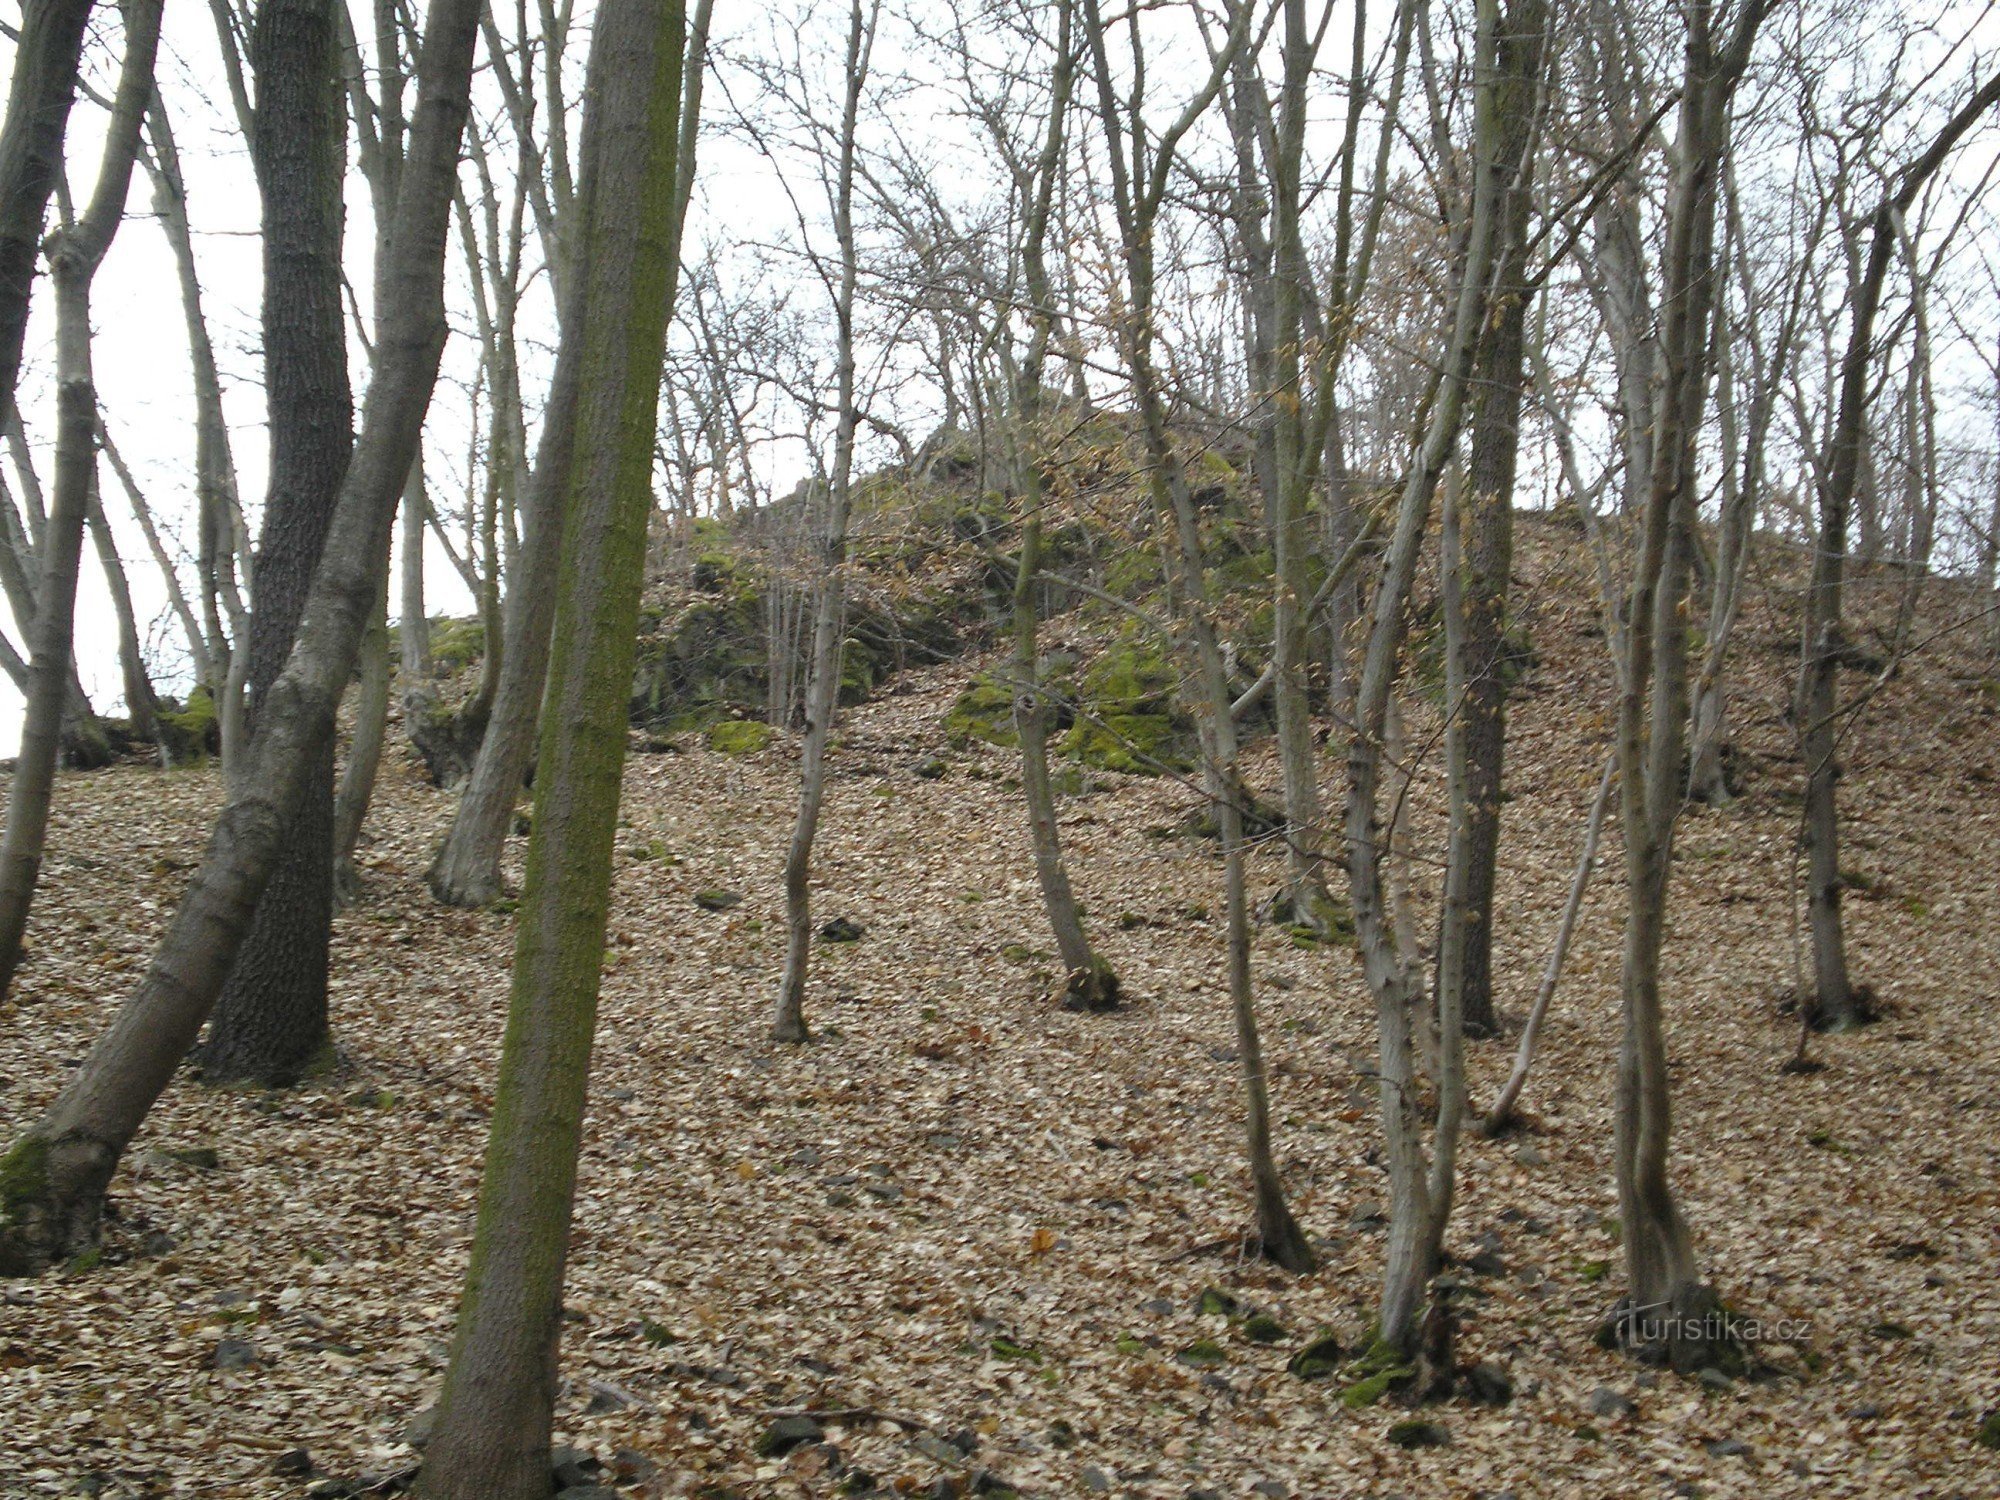 The promontory on which Karlík Castle stood